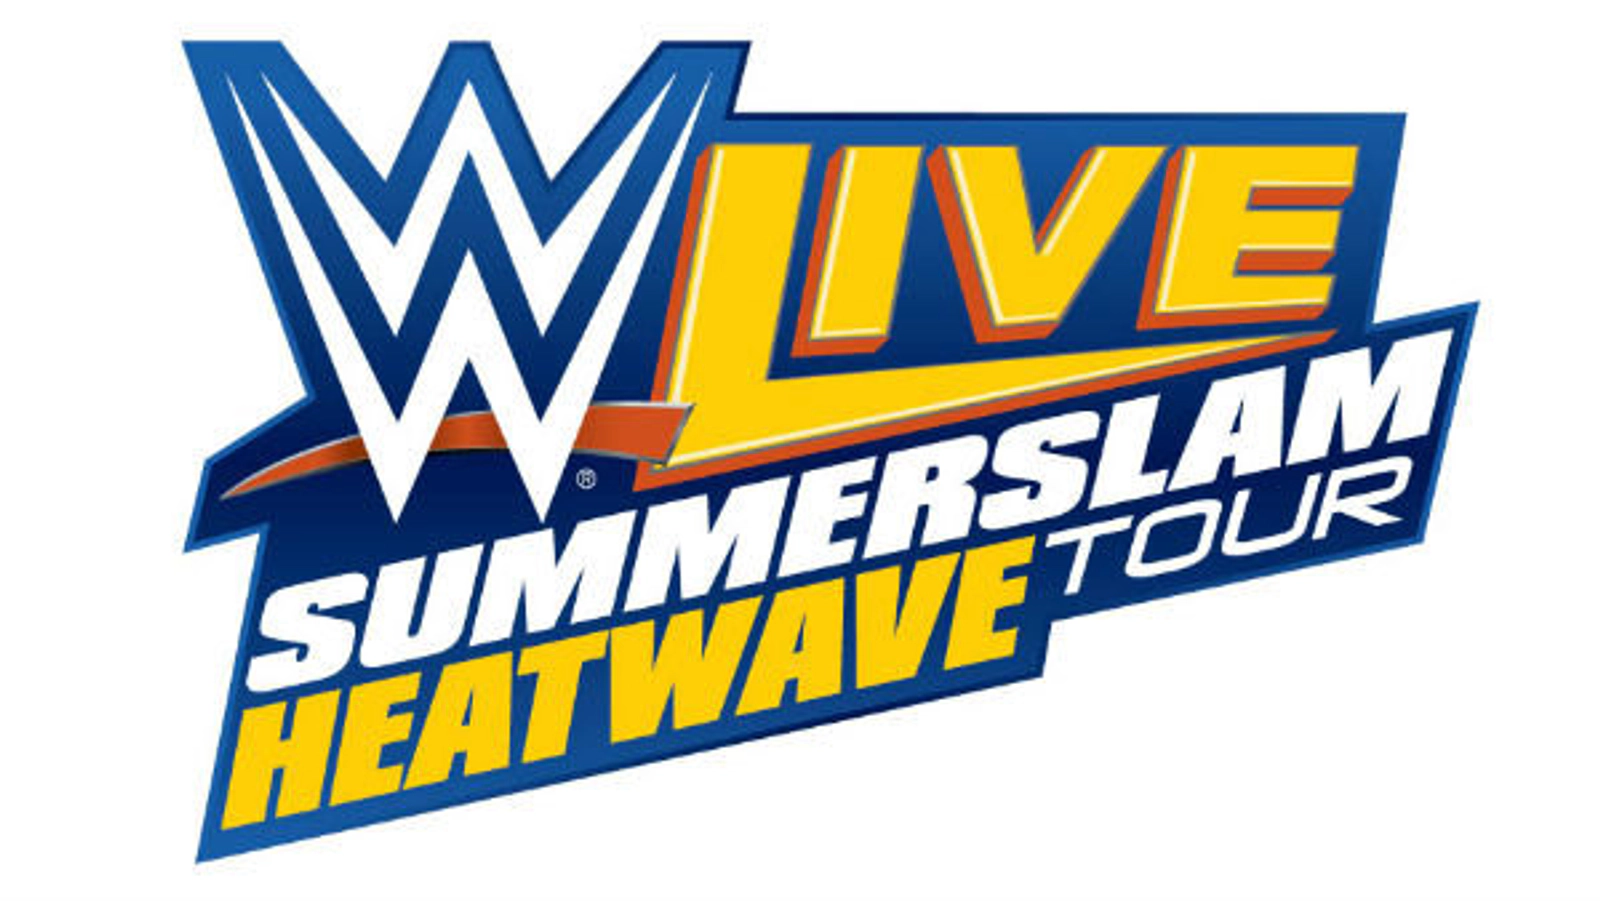                WWE Live: Summerslam Heatwave Tour - Thumbnail Image